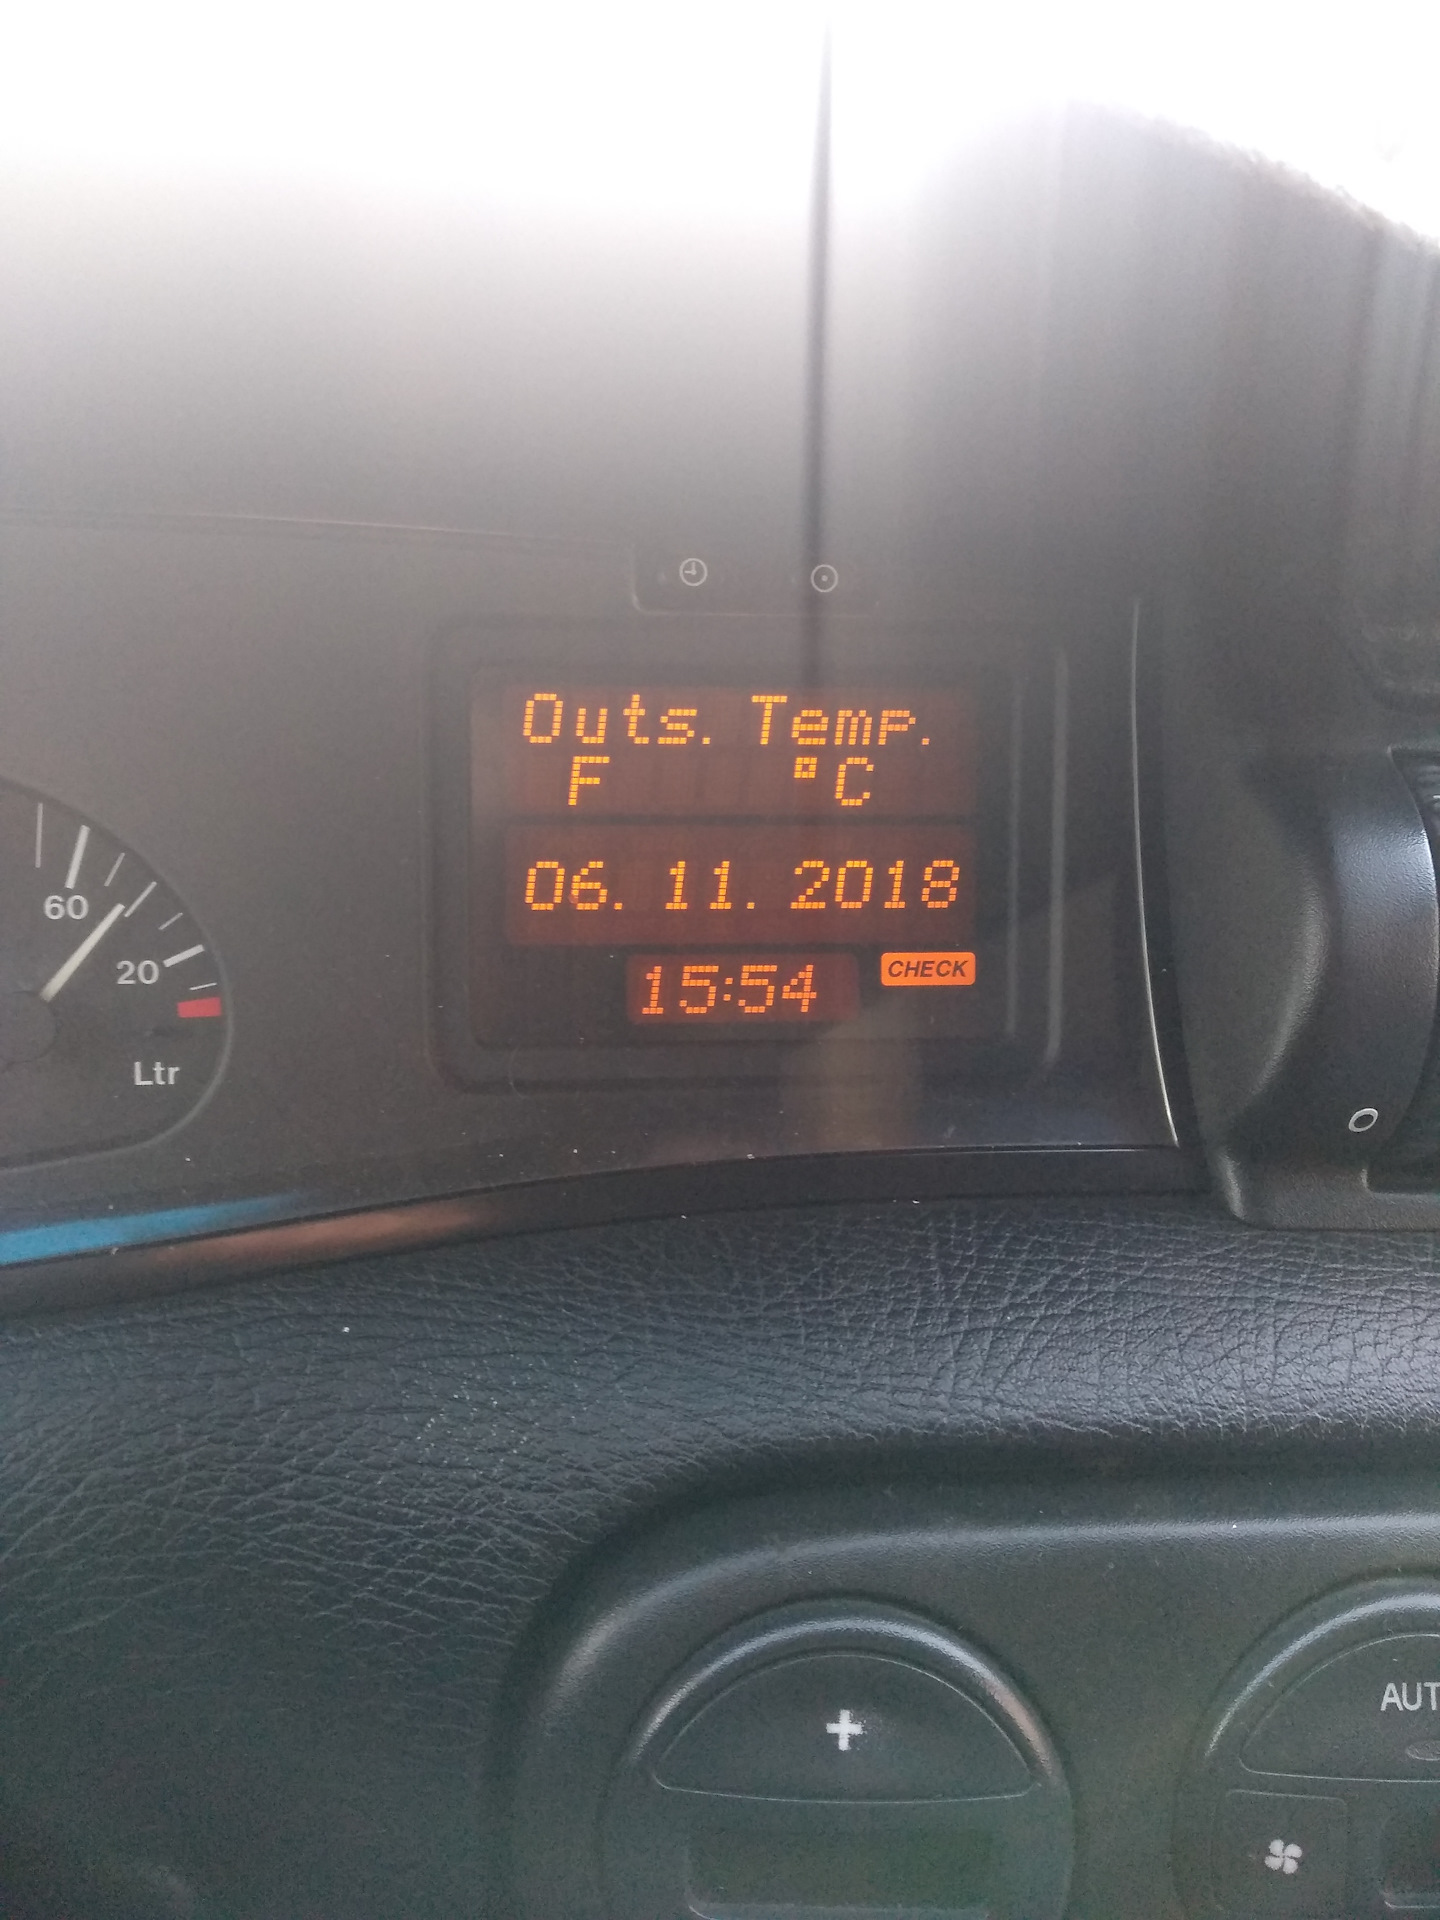 Датчик температуры опель омега б. Температурный датчик Опель Омега б. Датчик температуры Опель Омега б x20xev. Омега б Рестайлинг 2.2 датчик температуры. Датчики температуры Opel Omega b 1998.